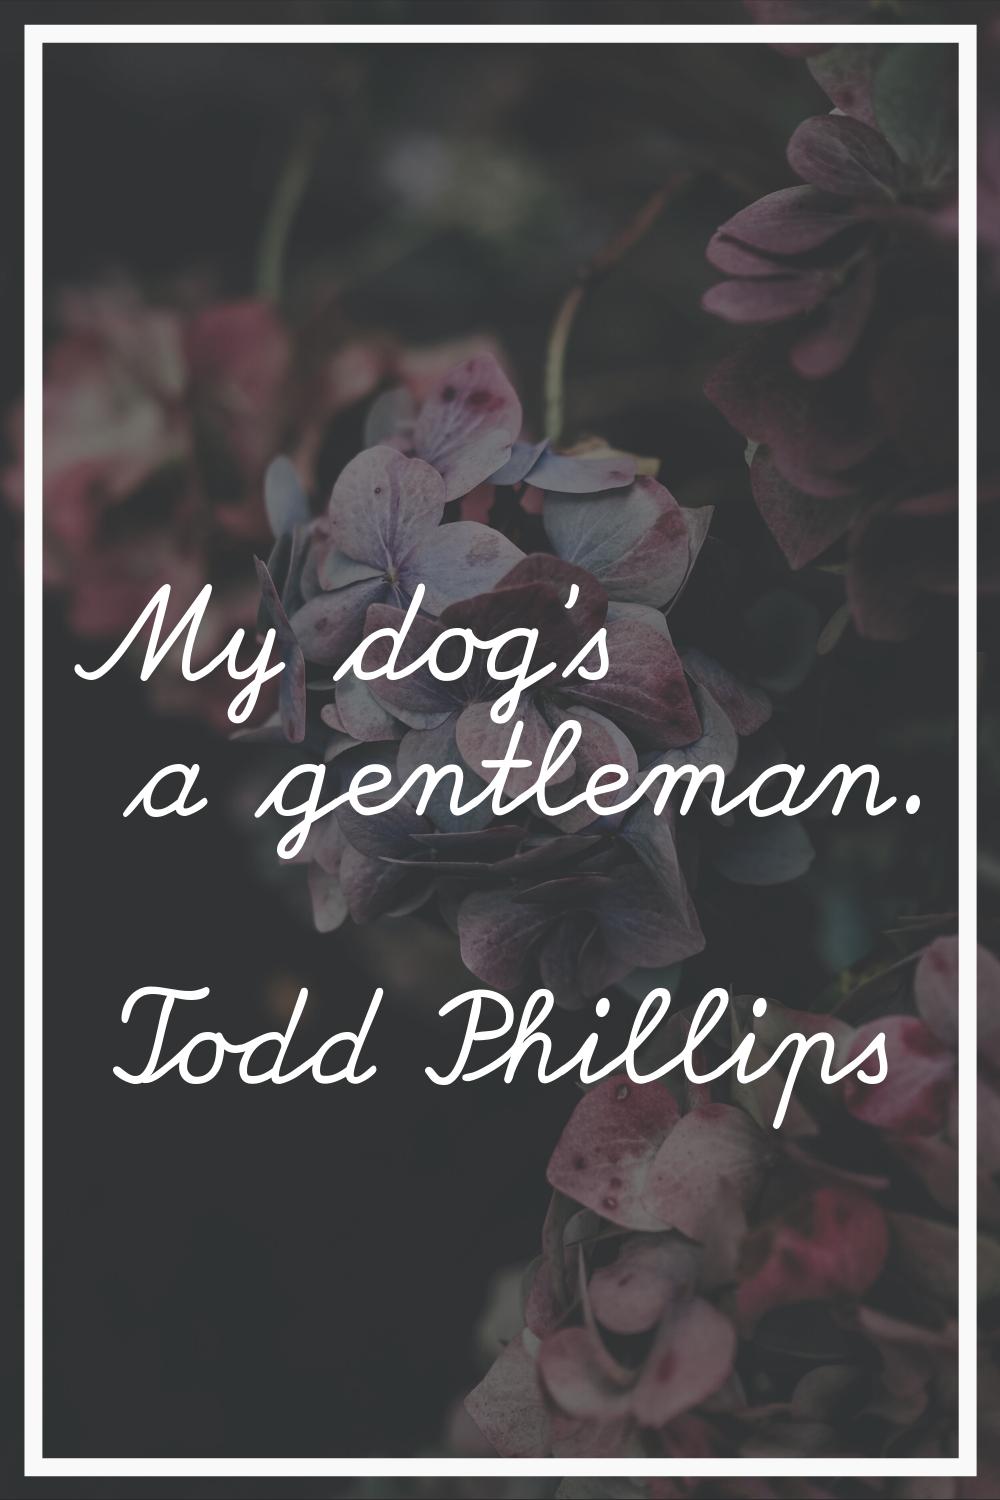 My dog's a gentleman.